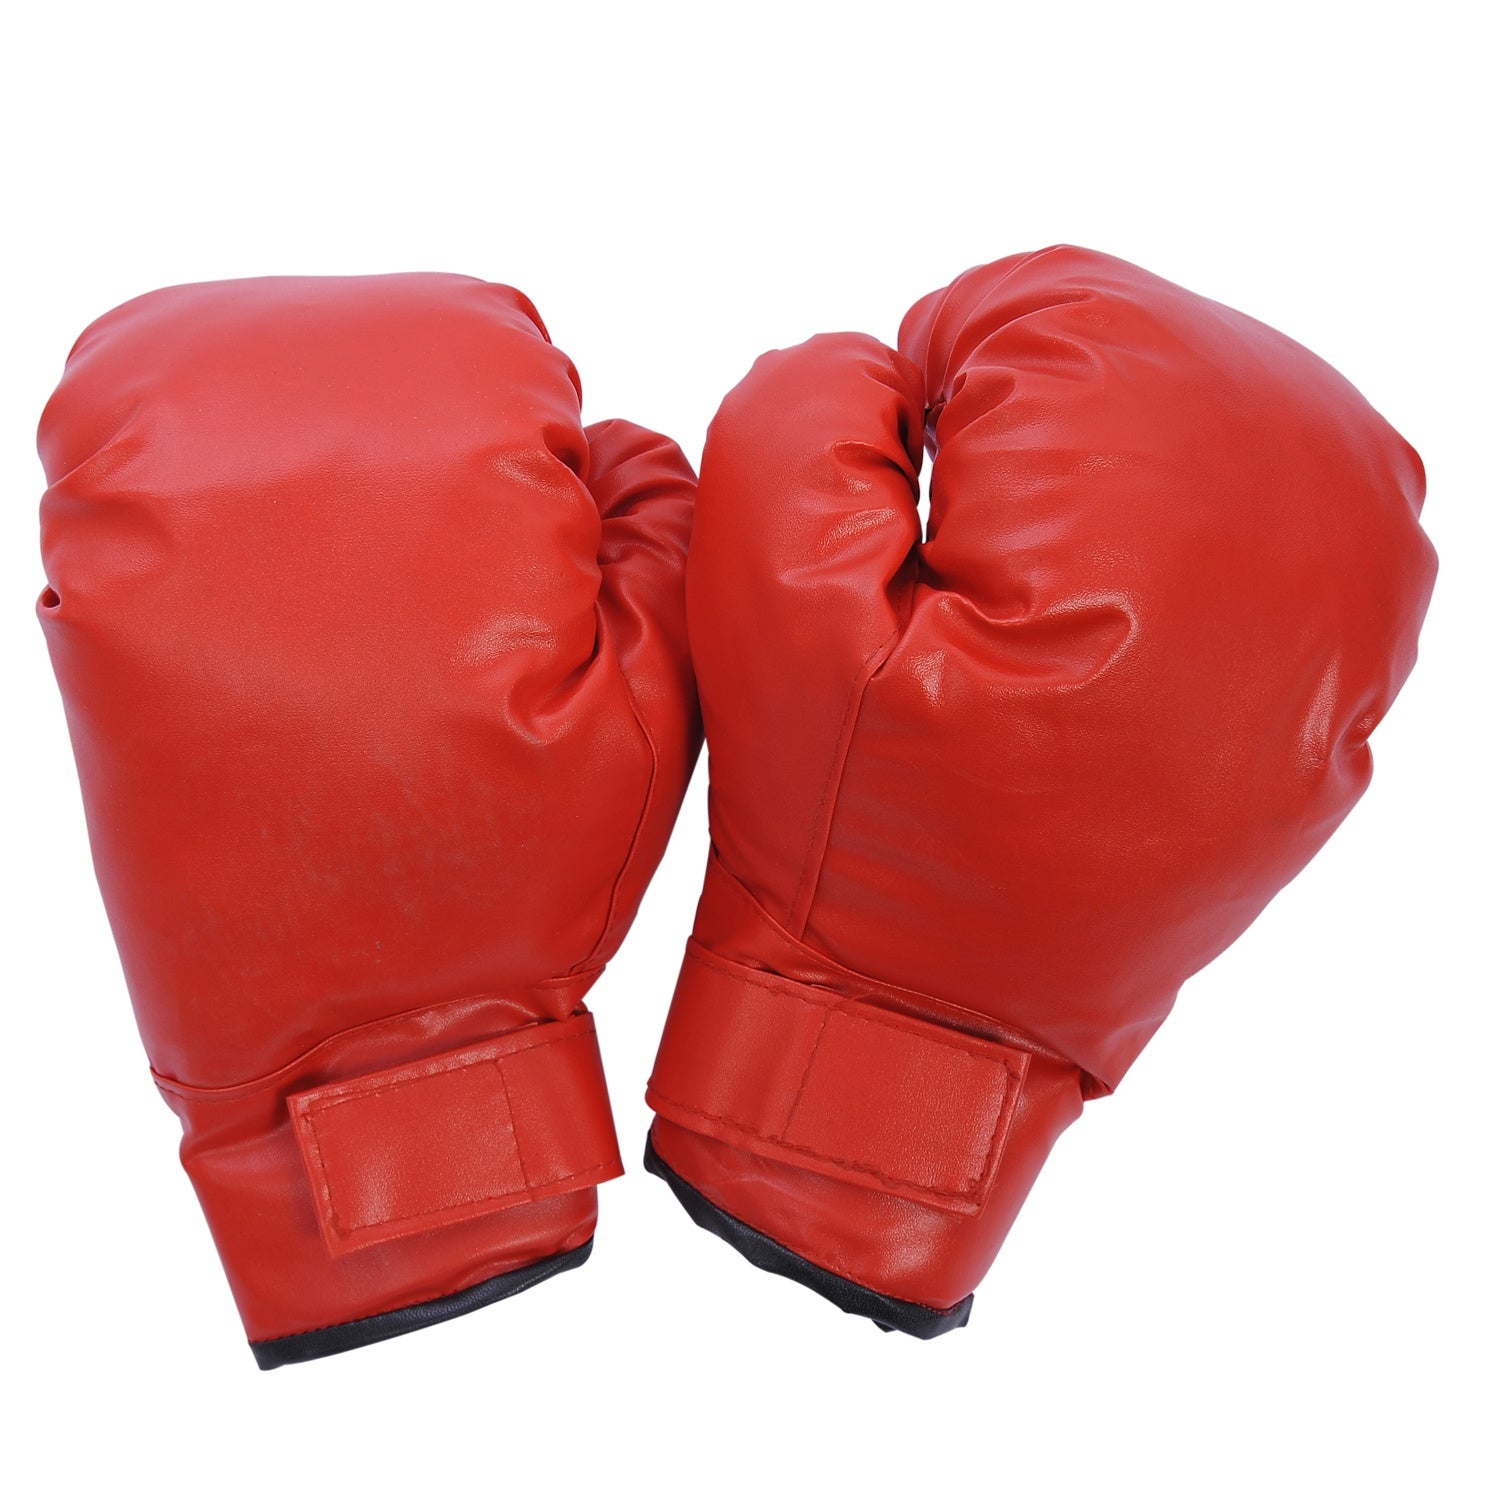 HOMCOM Kids PU Freestanding Boxing Punch Bag w/ Gloves Black/Red